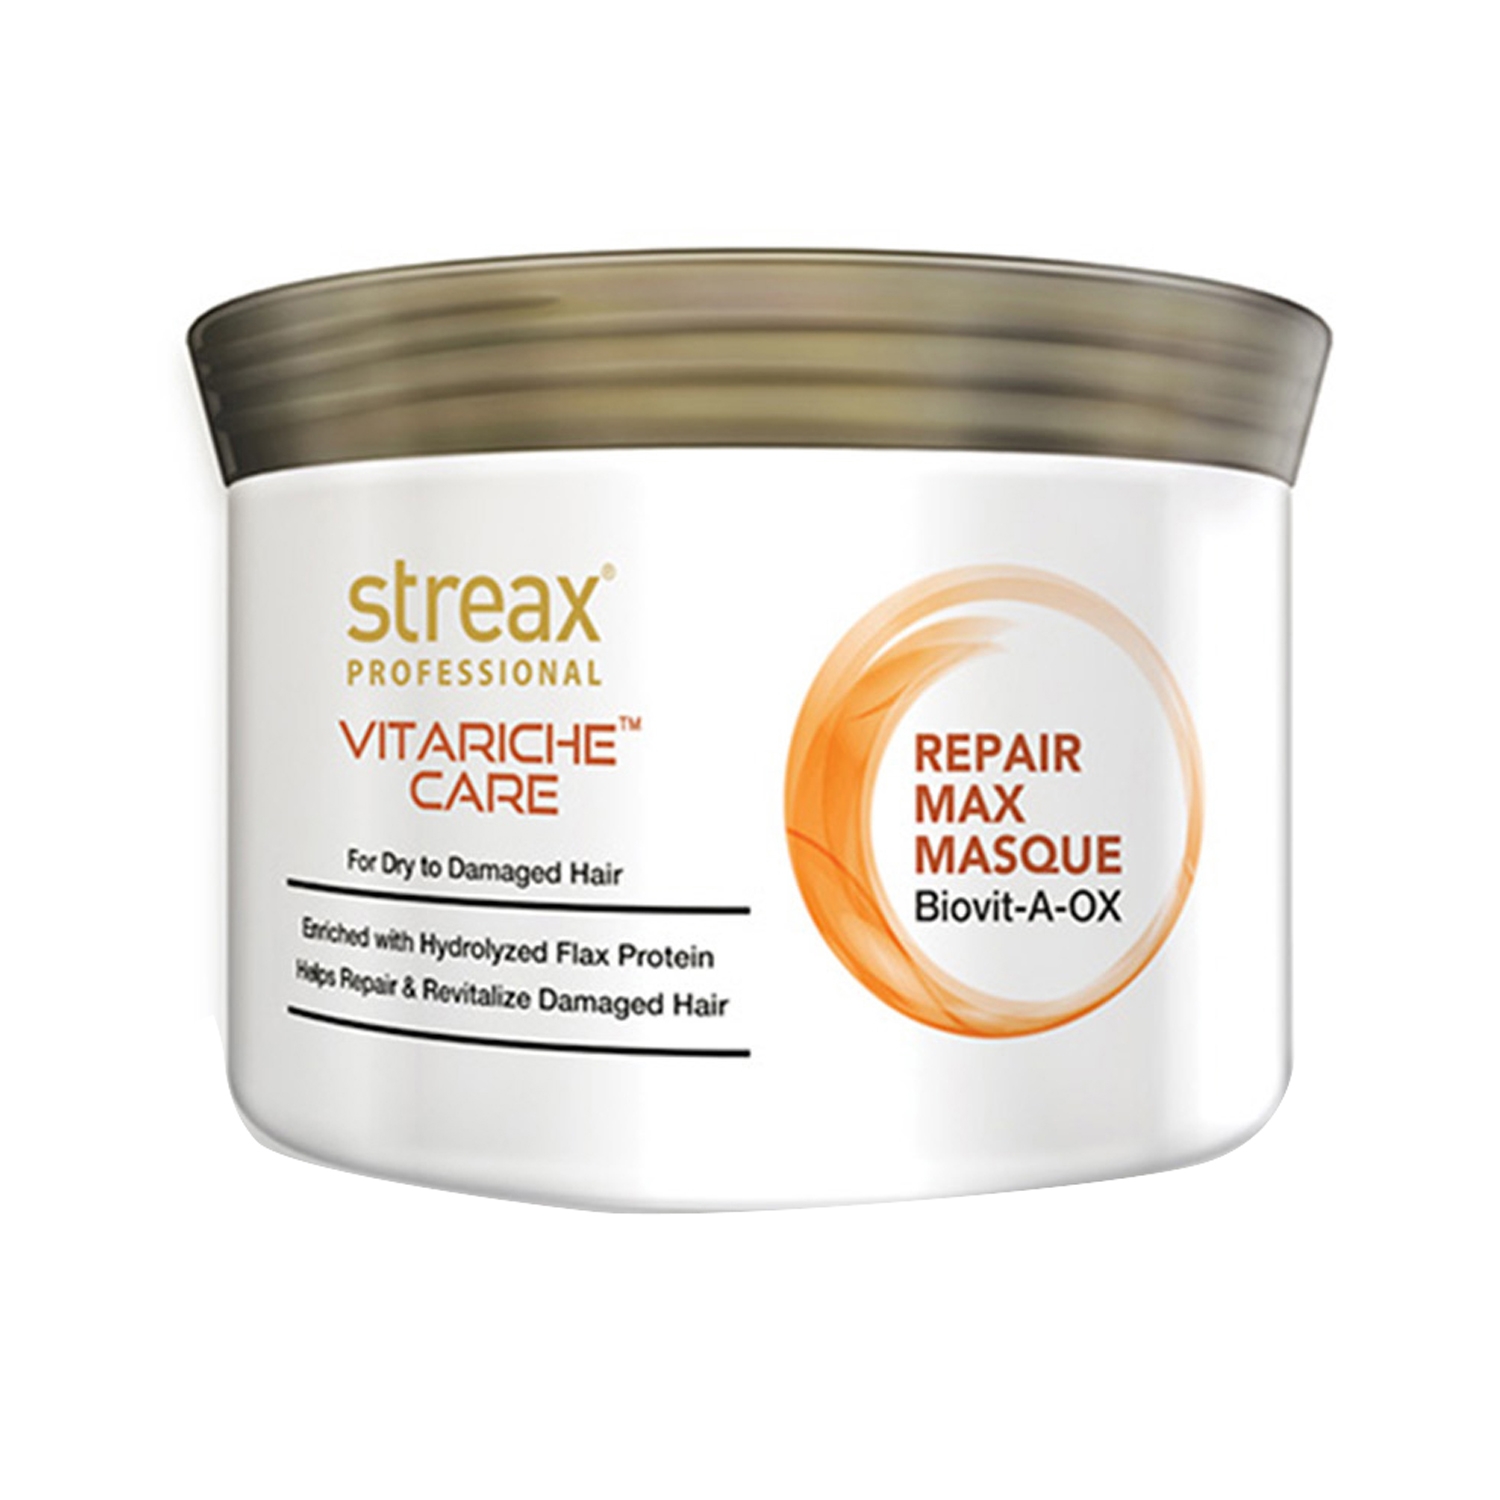 Streax Professional Vitarich Care Repair Max Masque (500g)